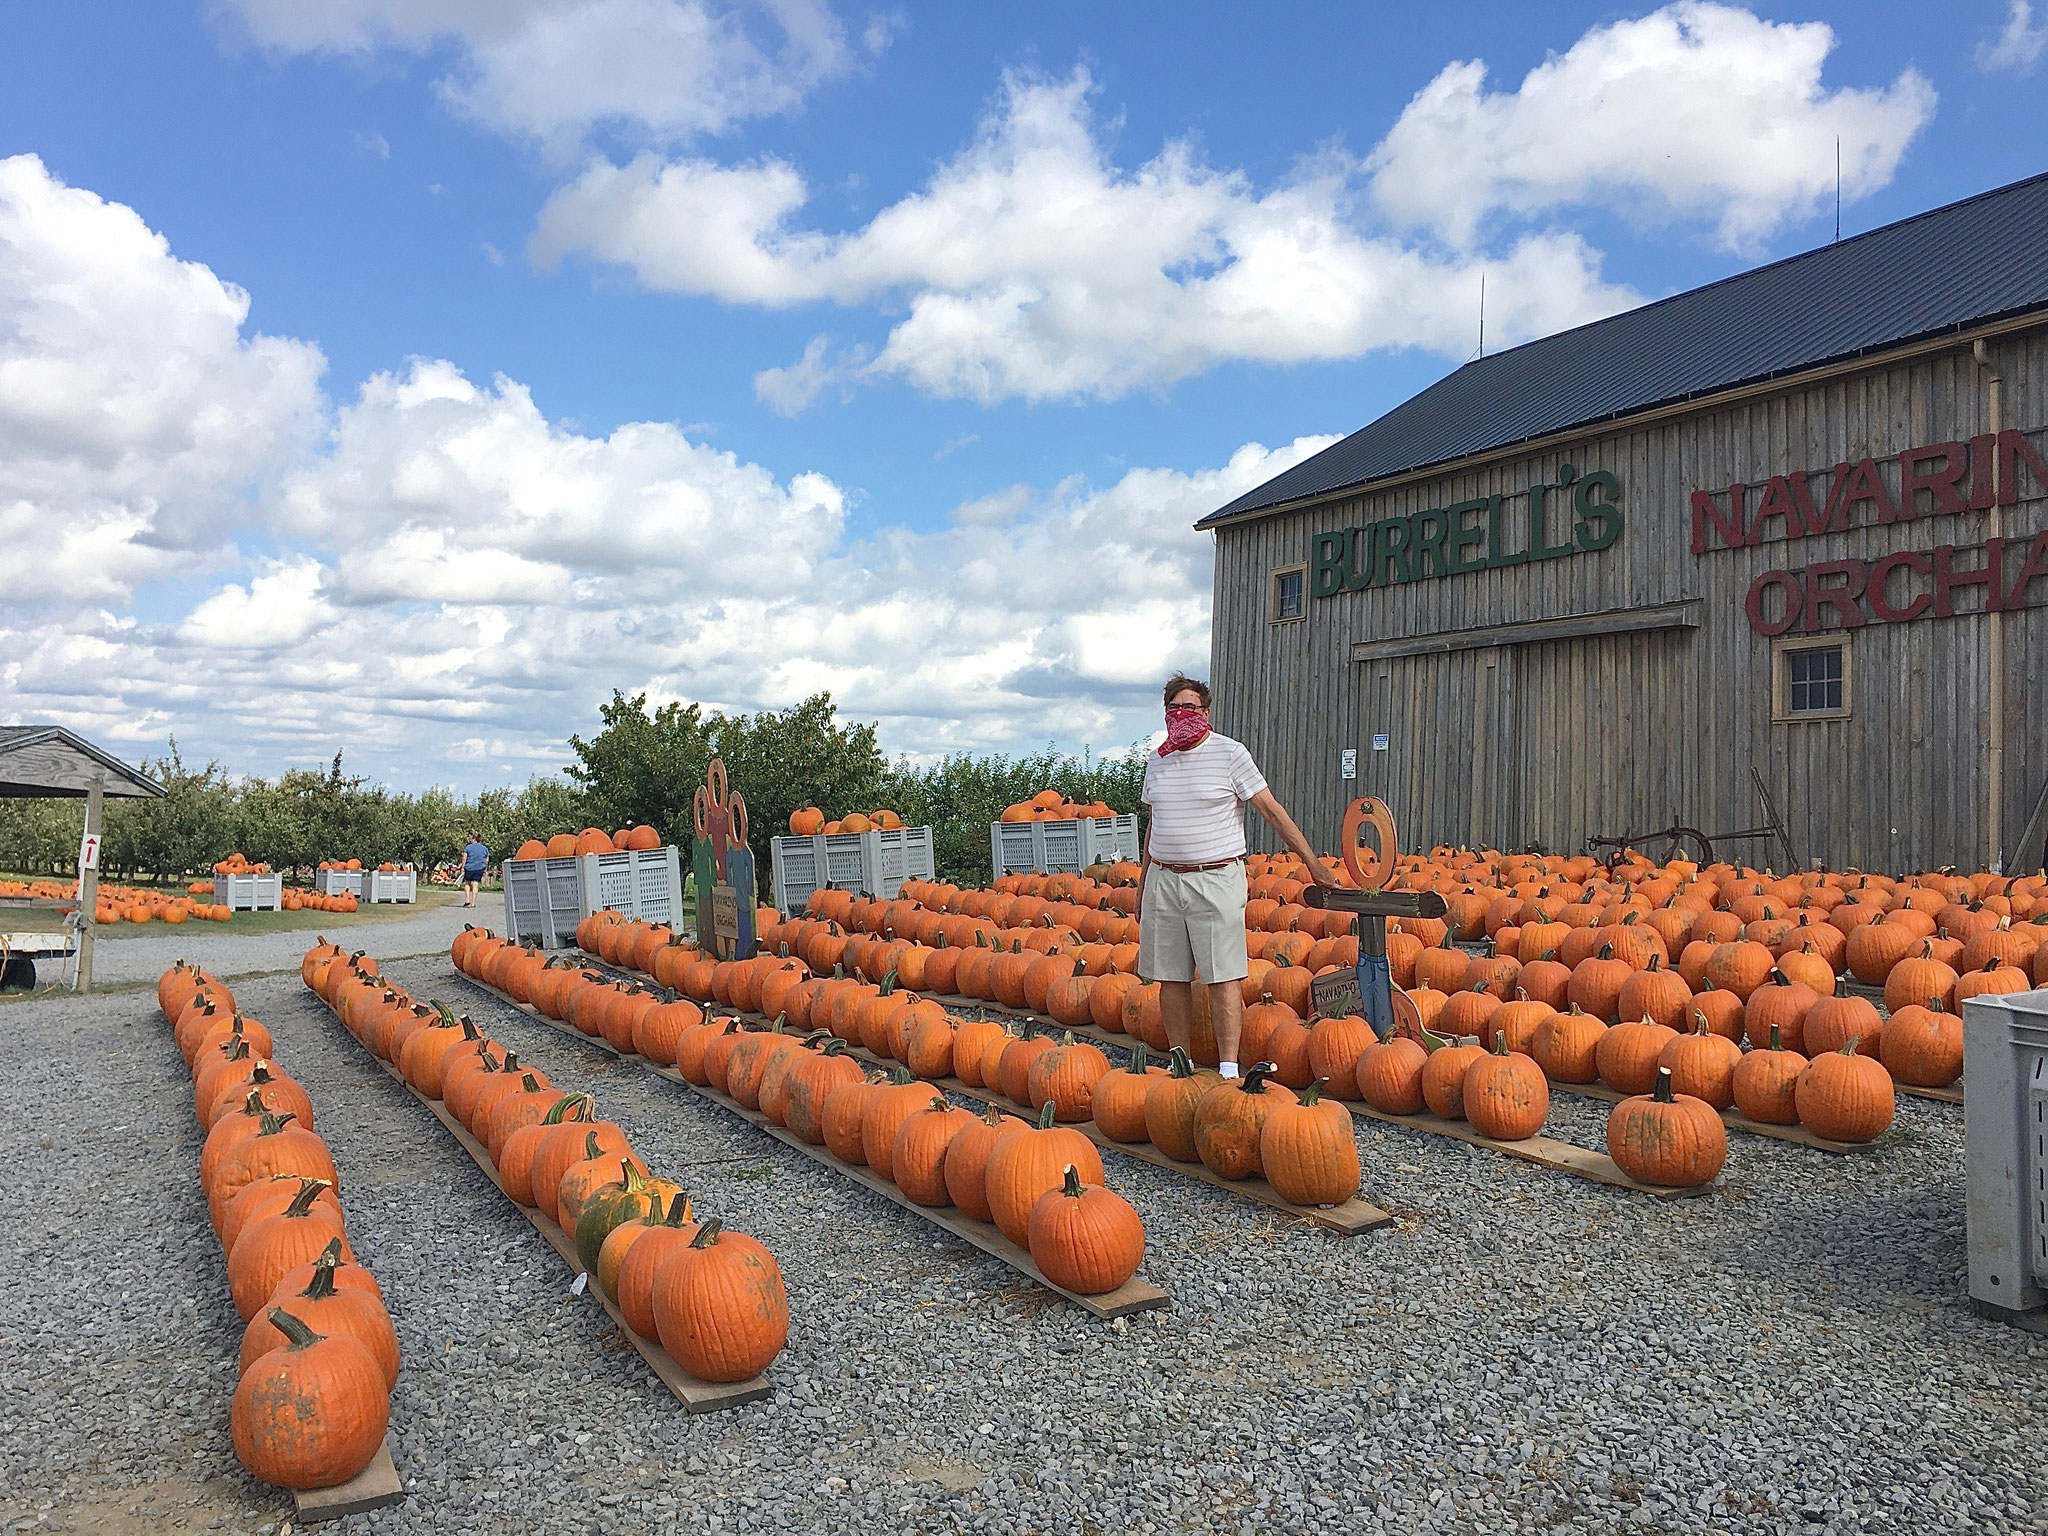 the Bandit, 20, enjoys the pumpkins along Rt 20, at Navarino, NY, near Syracuse, 9-28-20